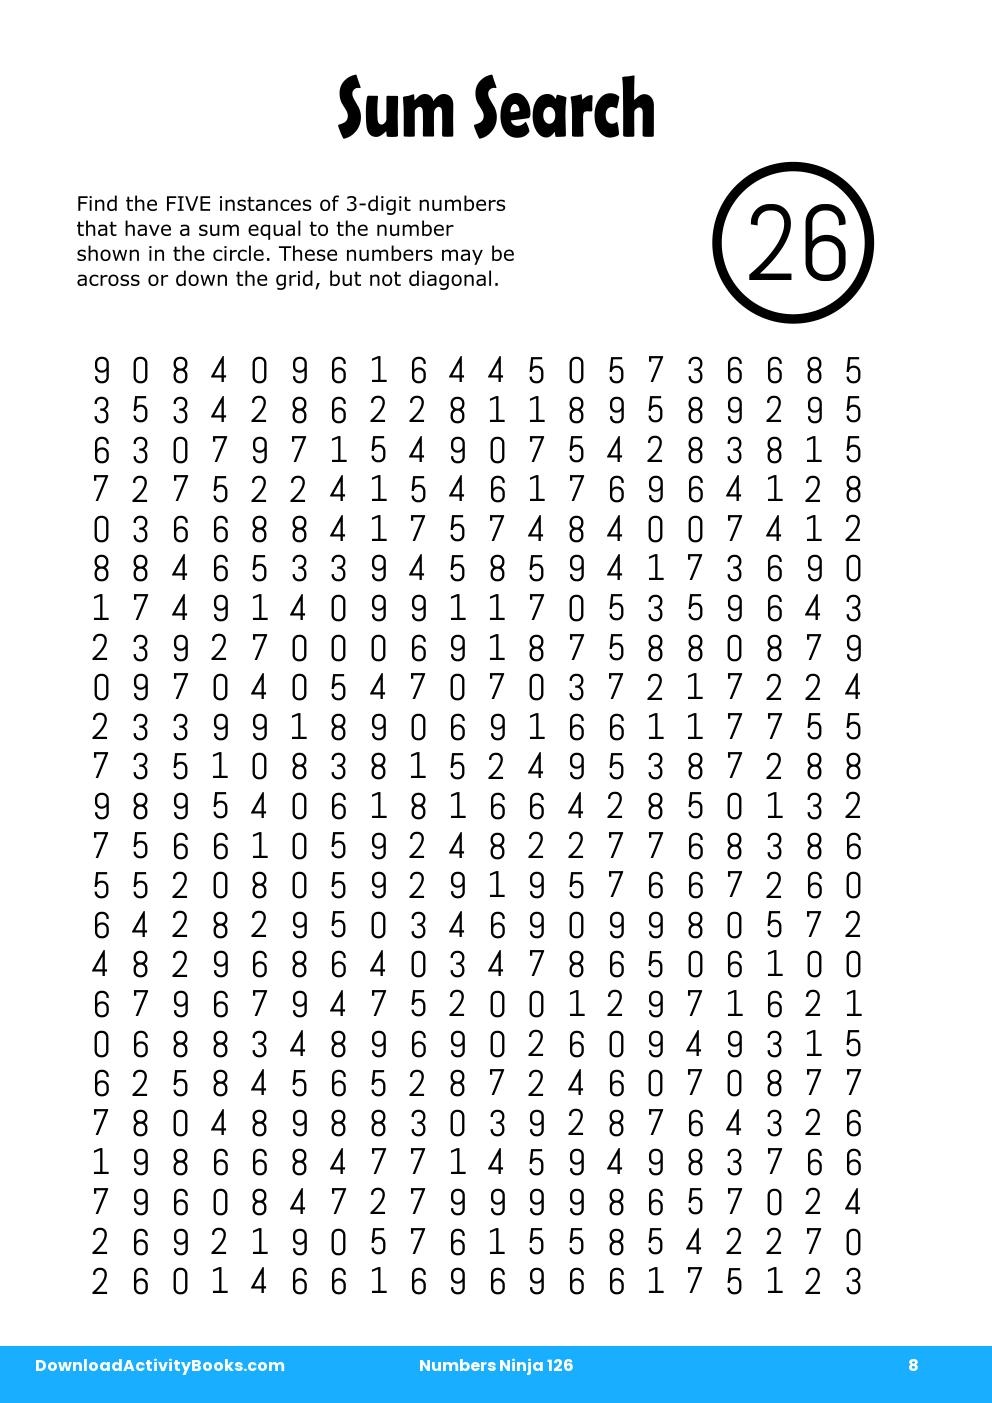 Sum Search in Numbers Ninja 126